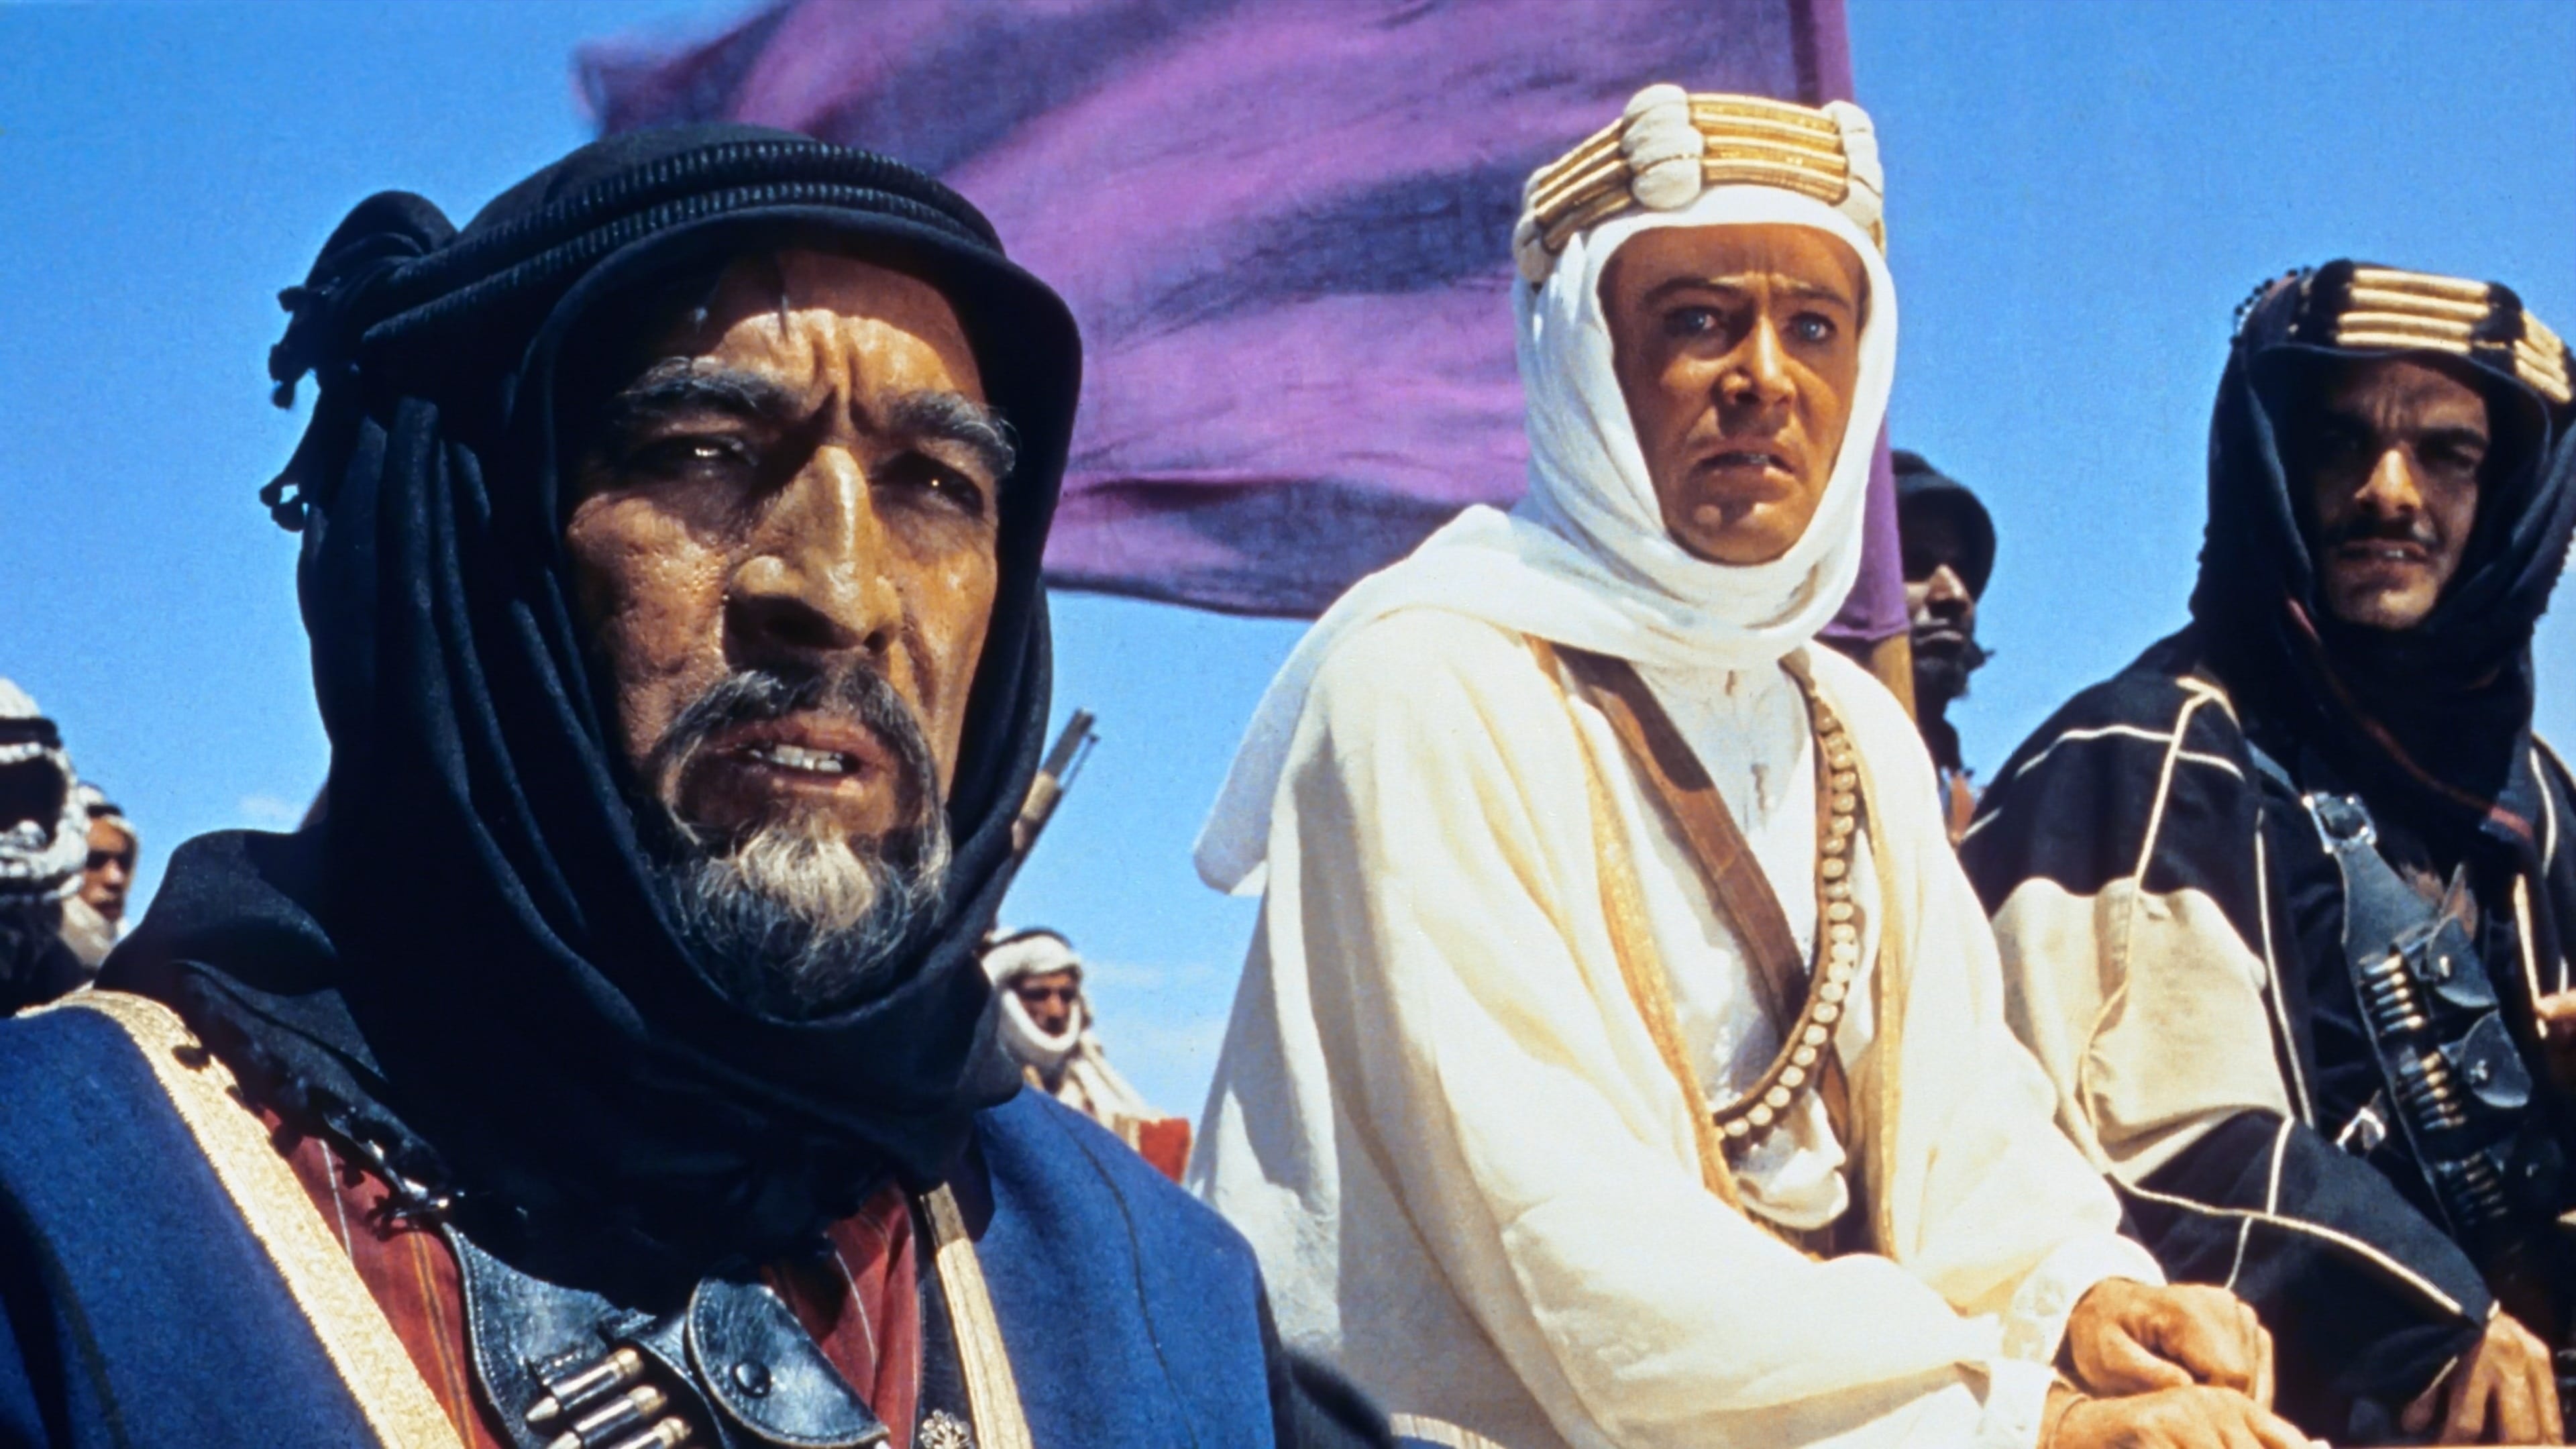 Lawrence Xứ Ả Rập - Lawrence of Arabia